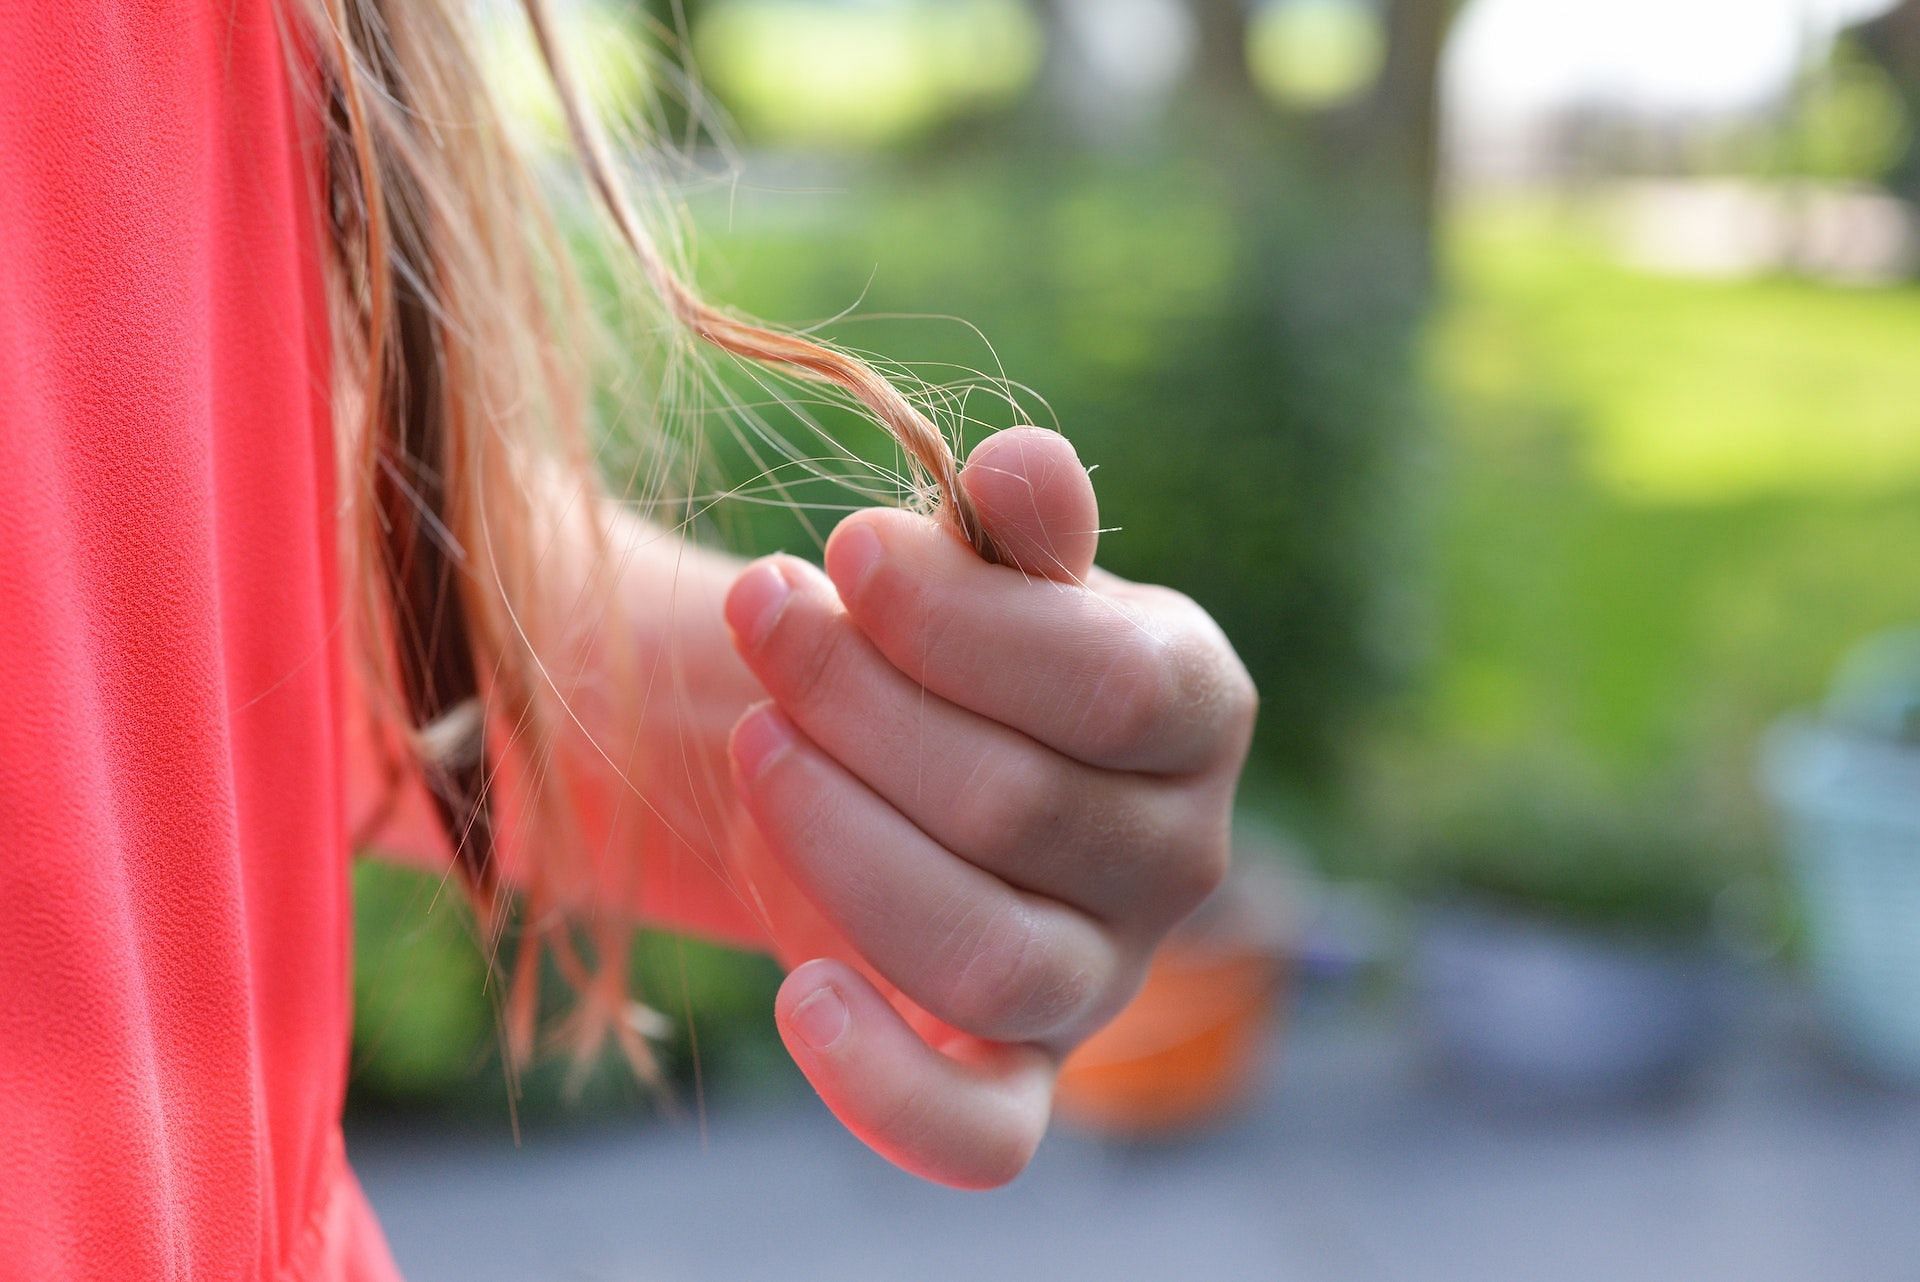 Pumpkin seed oil reduces hair fall. (Photo via Pexels/Skitterphoto)